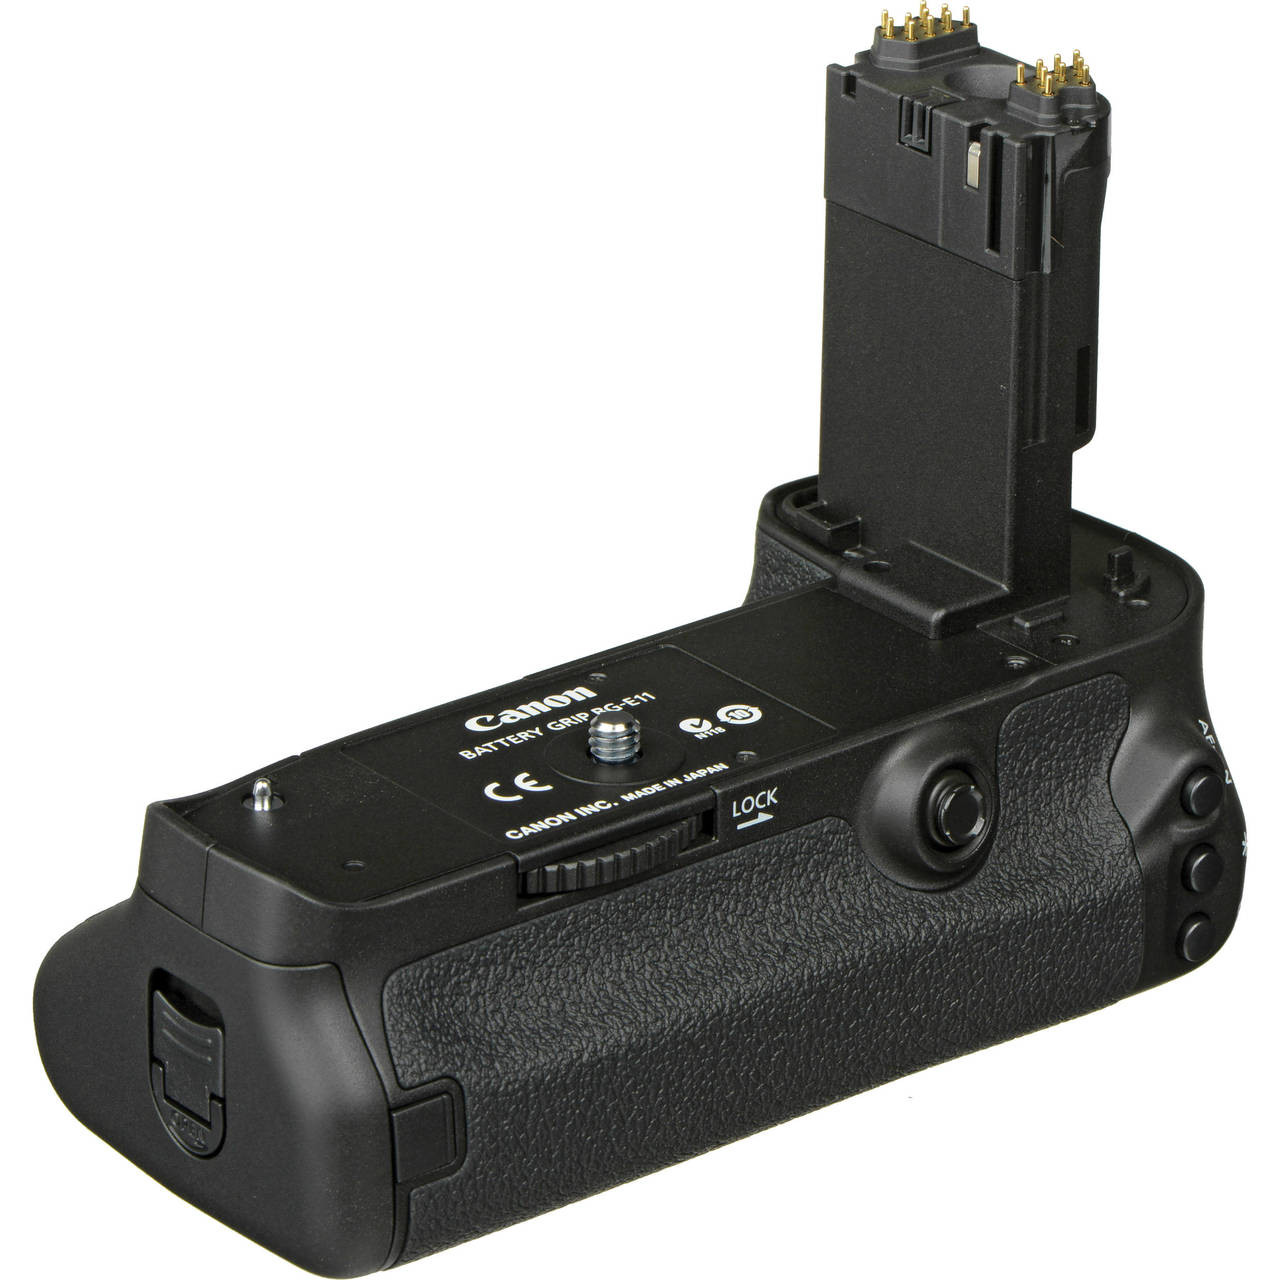 BG-E11 Battery Grip For 5D Mark III Camera at Acephoto.net